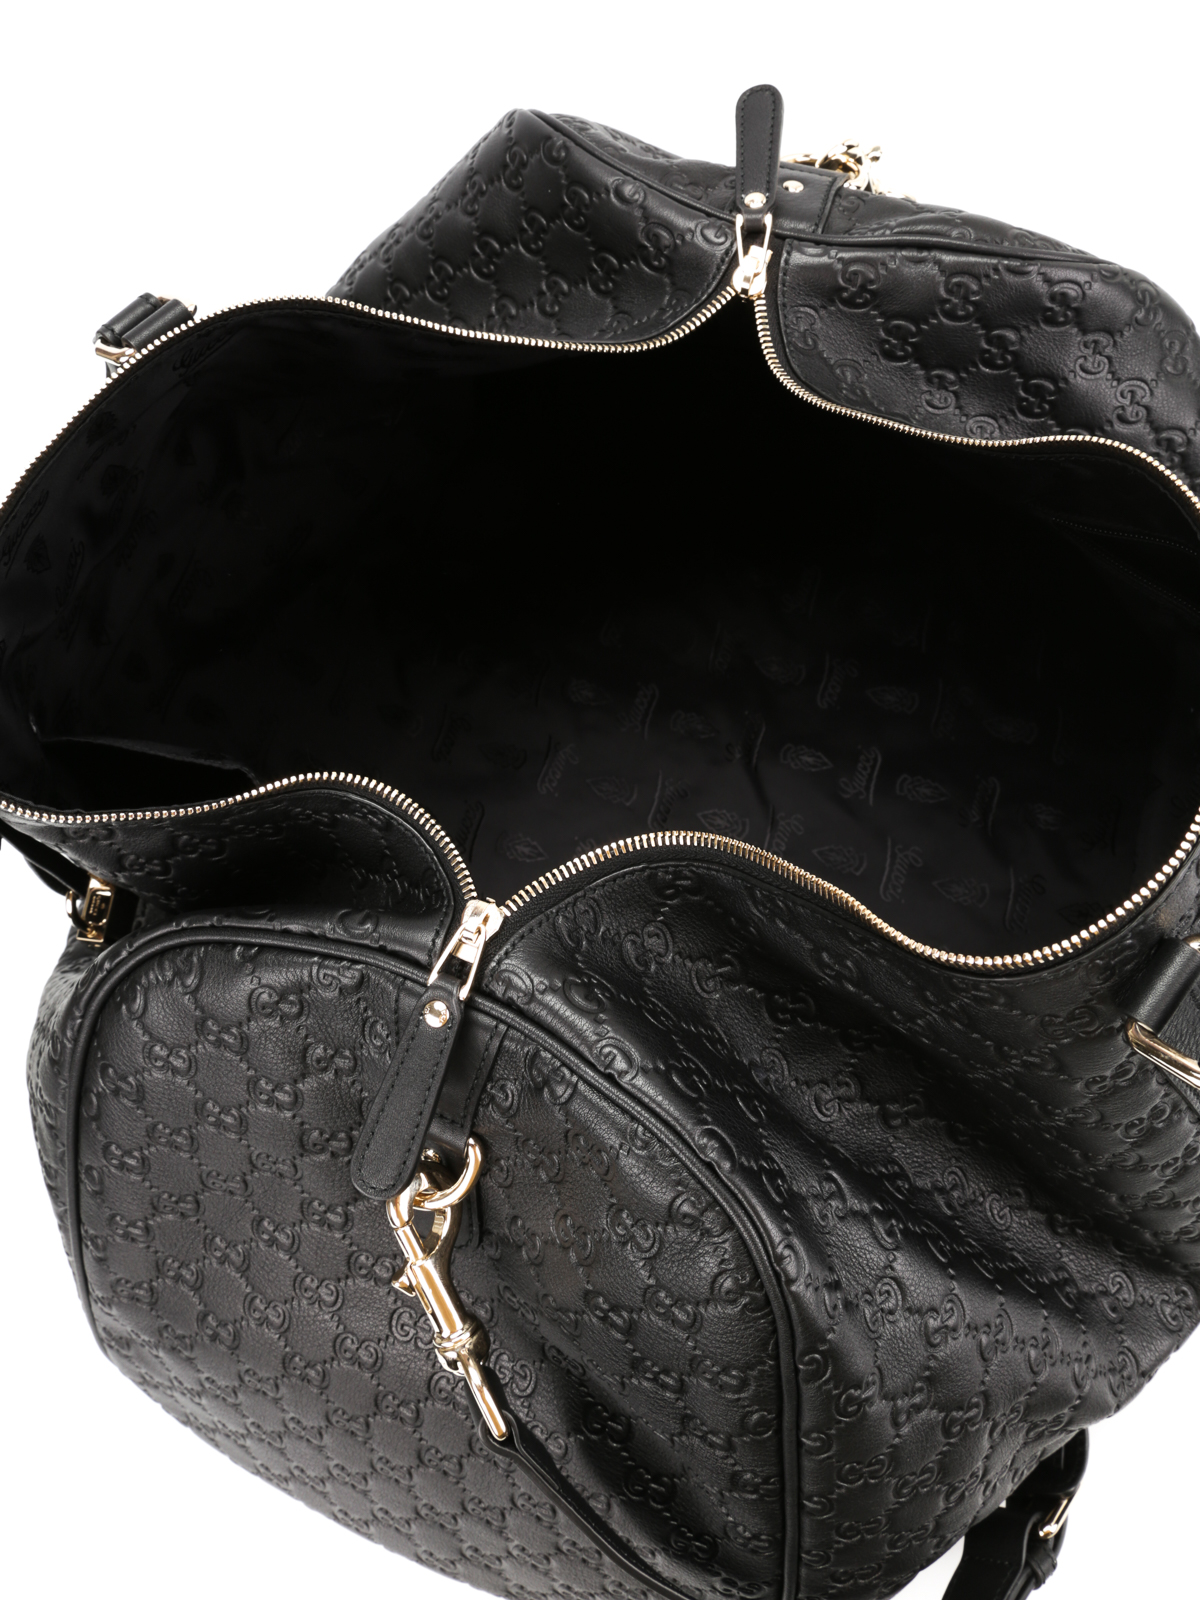 gucci duffle bag black leather